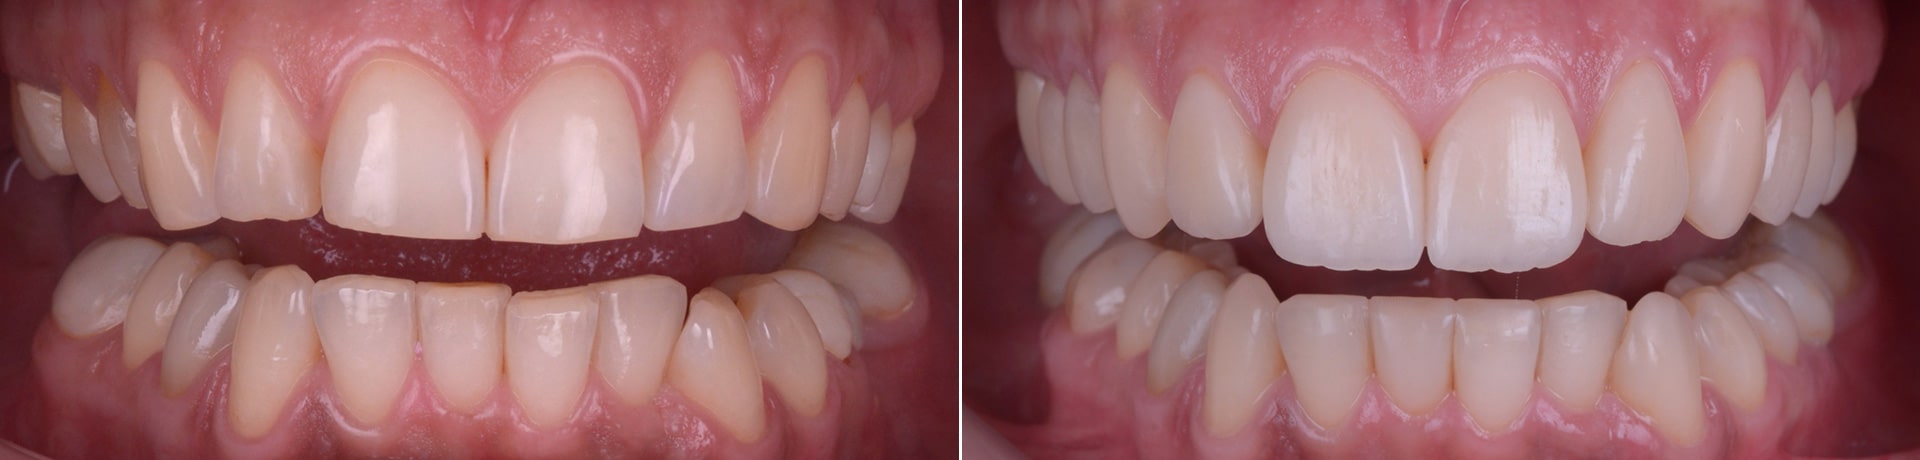 Felicia reabilitare complexa fatete coroane implanturi gutiera ATM rugina clinica dentara timisoara before after